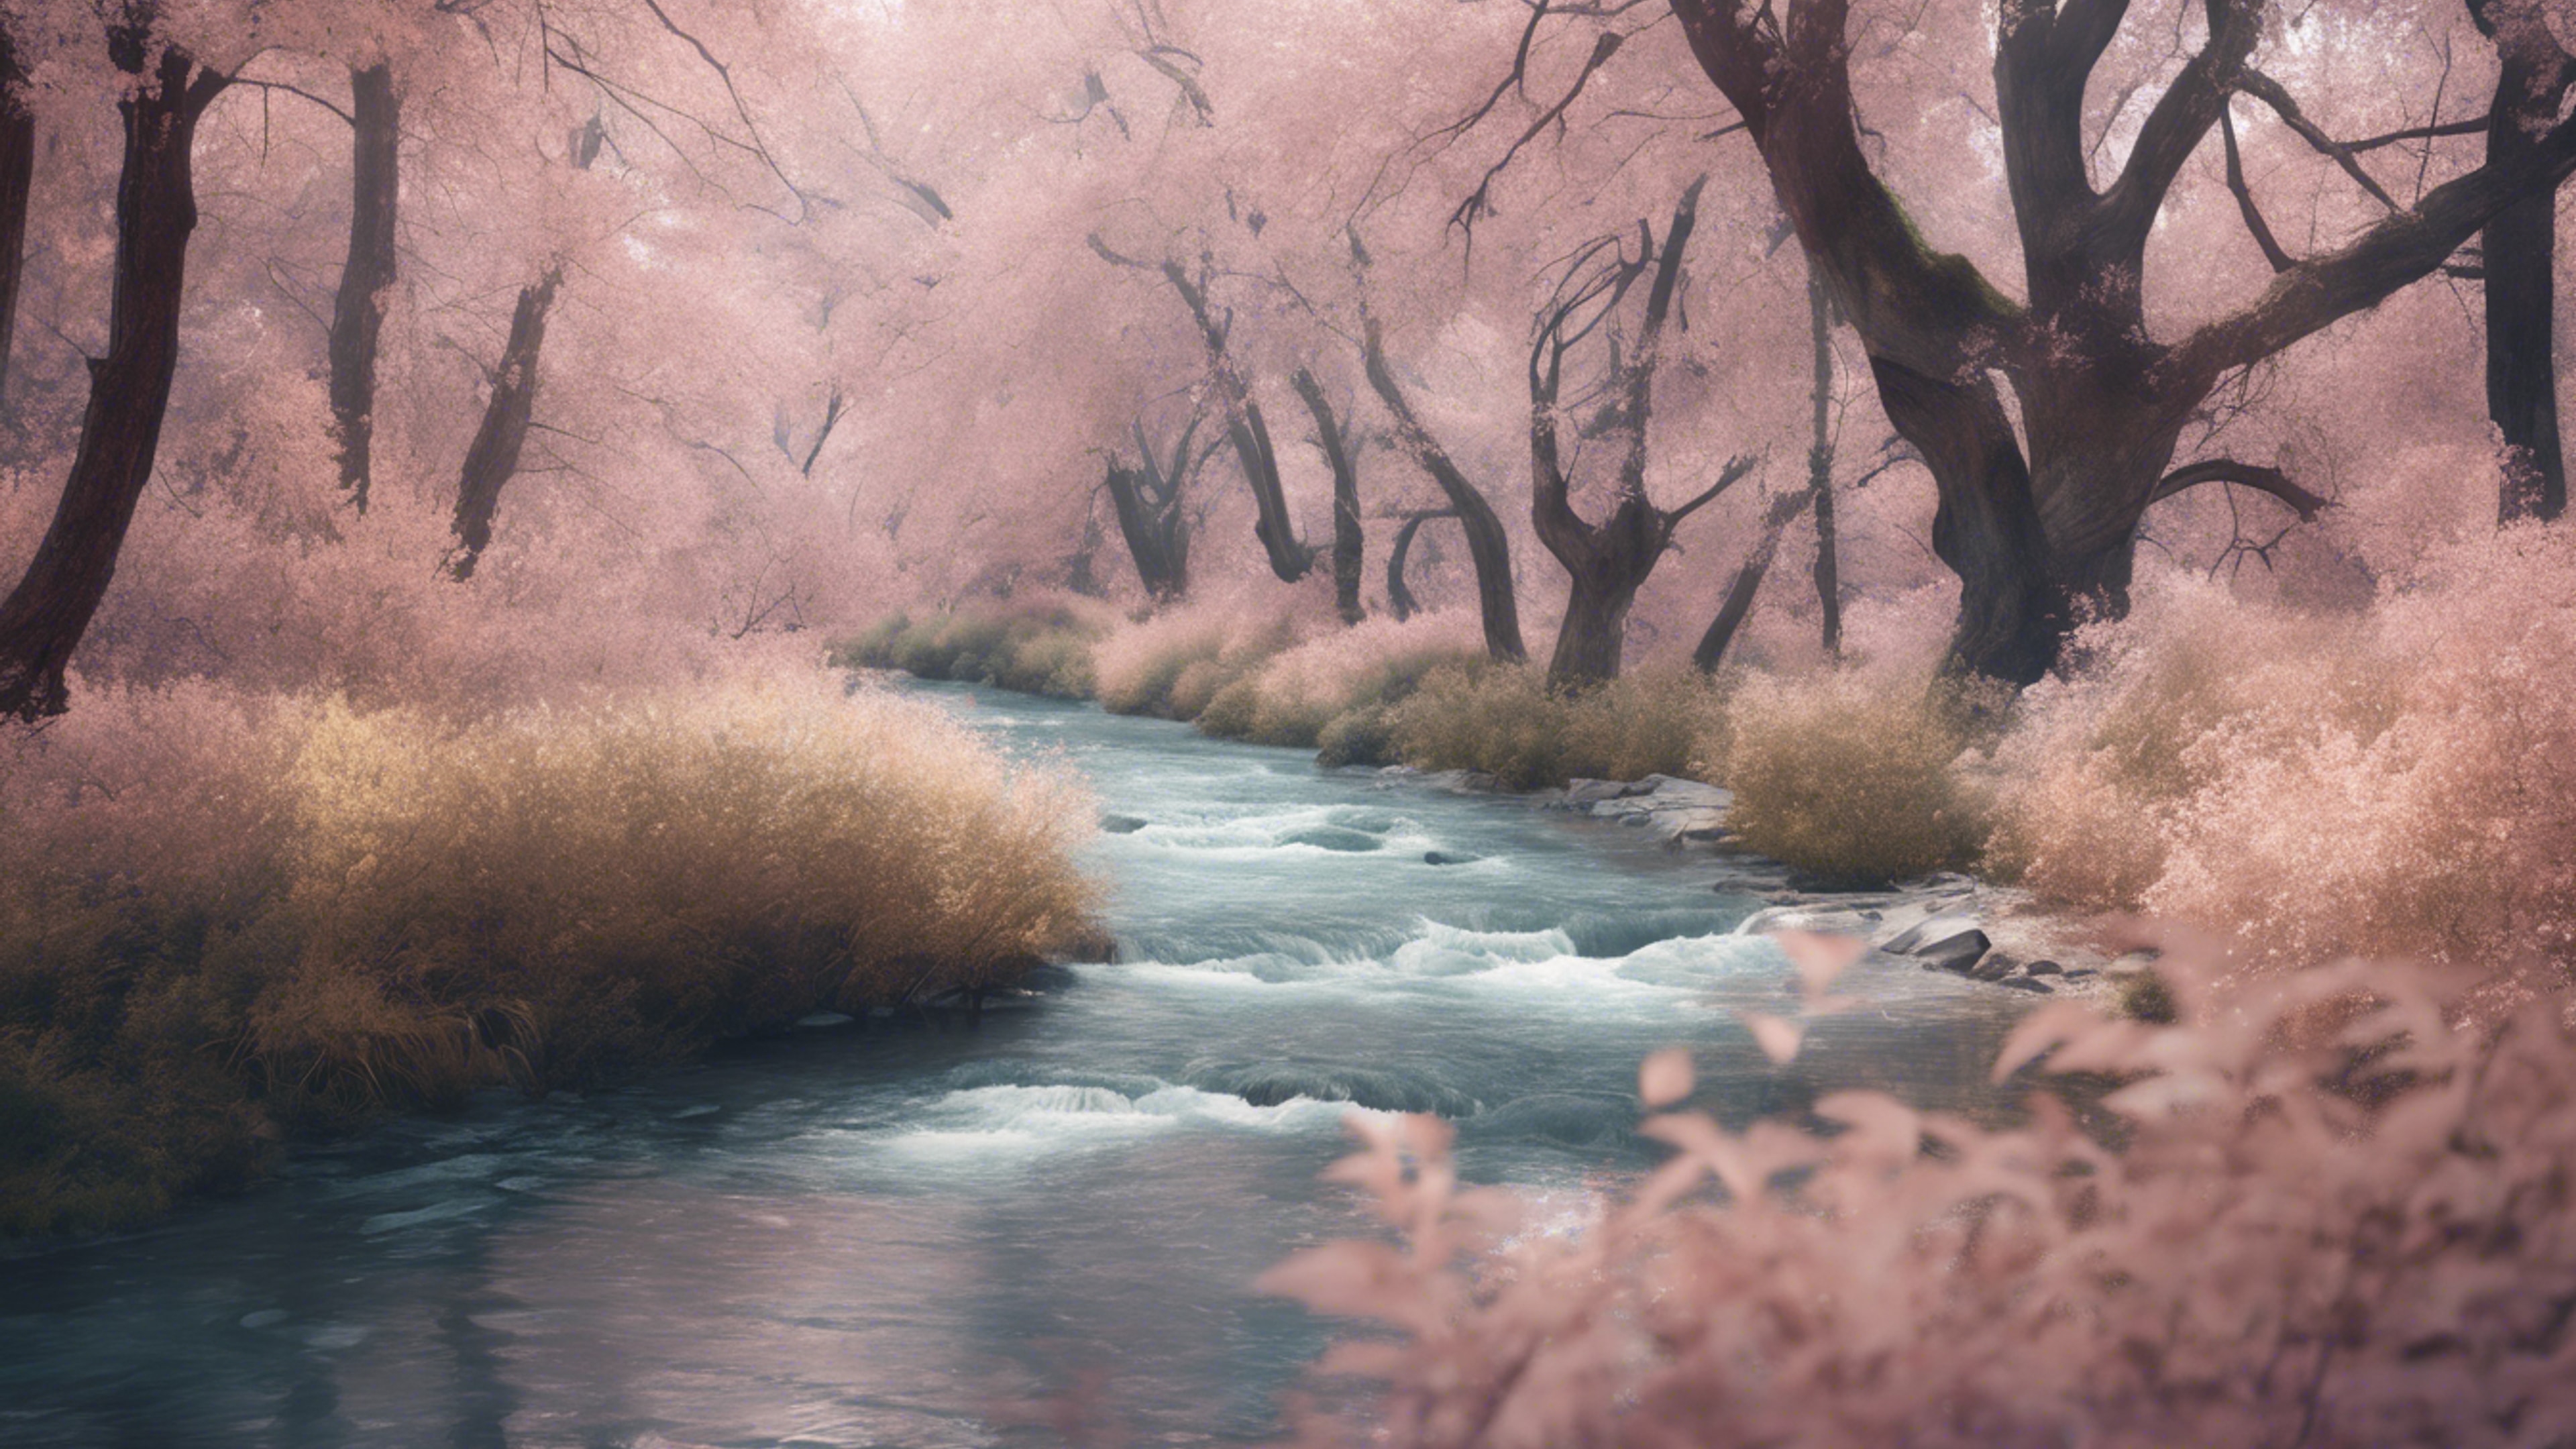 An illustration of a murmuring creek, surrounded by trees bearing cool pastel leaves. duvar kağıdı[1b082a297a56458ebf1b]